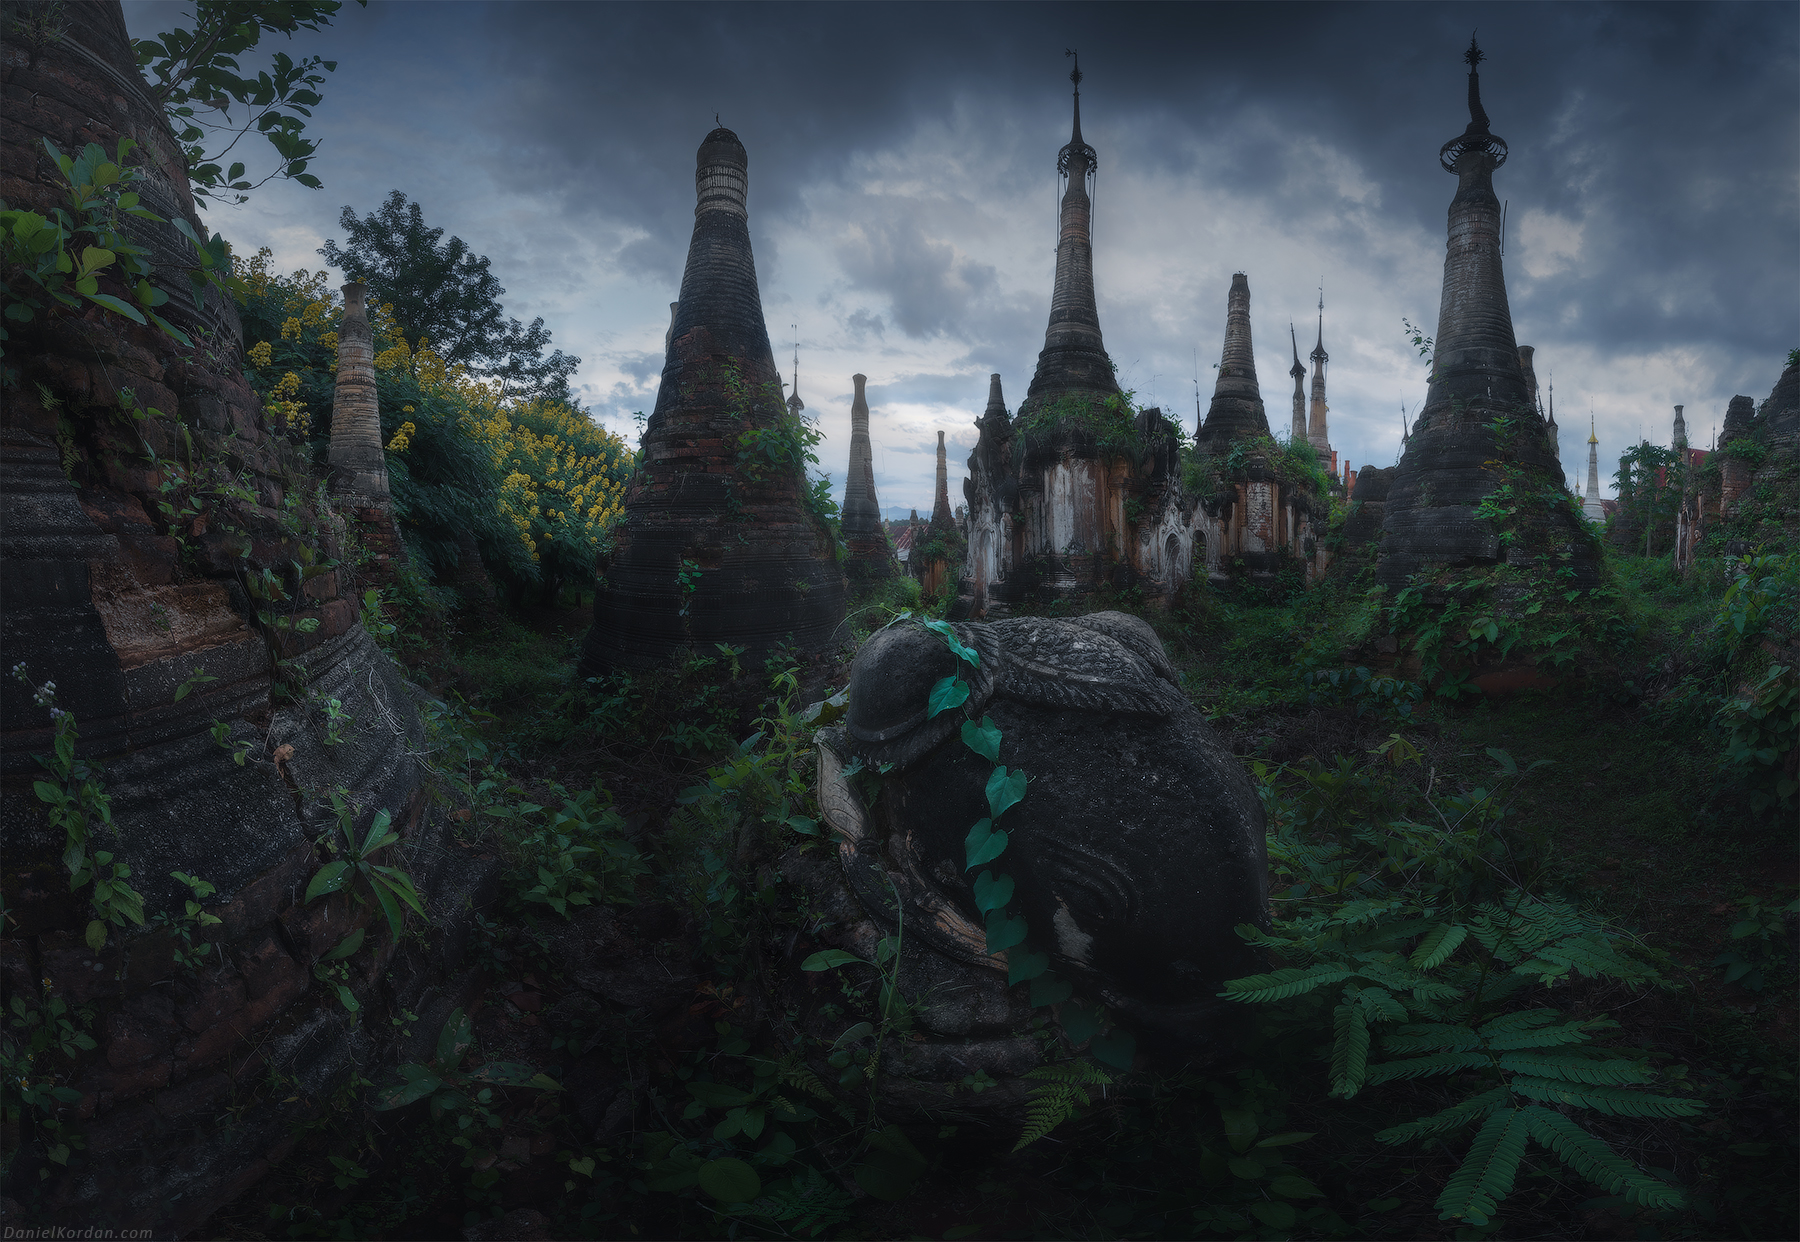 Daniel Kordan Ruins Myanmar Landscape Architecture Moss Plants Overgrown Clouds Overcast Burma 1800x1242